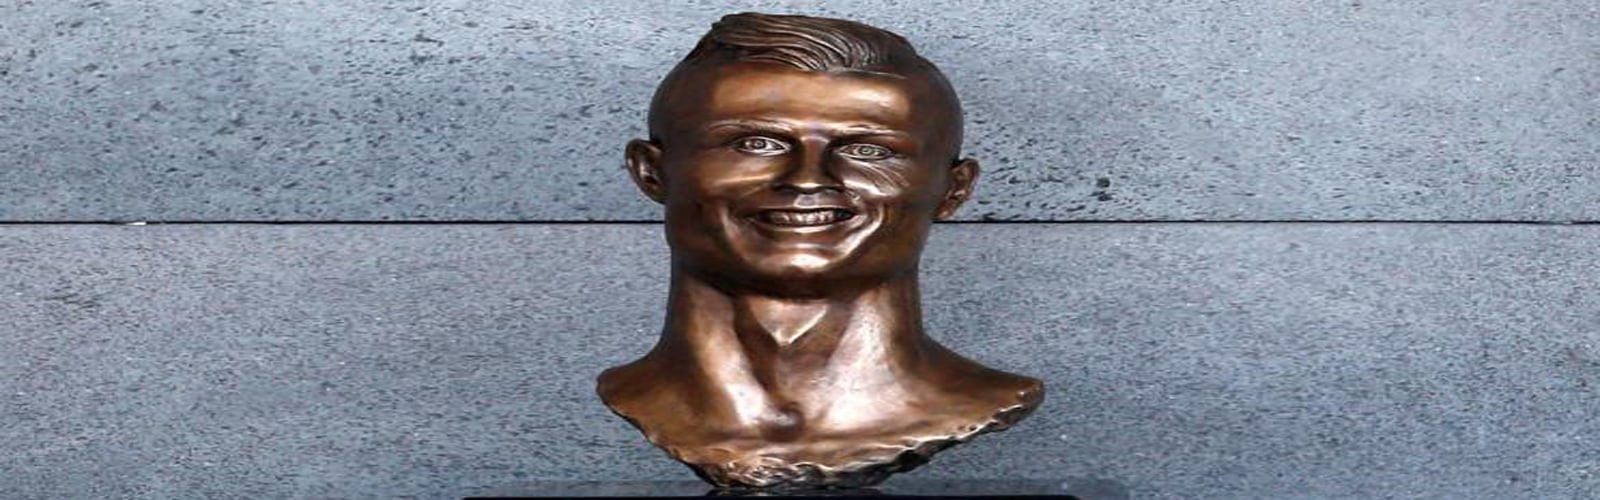 Hideous Cristiano Ronaldo Statue Sparks Social Media Laughs